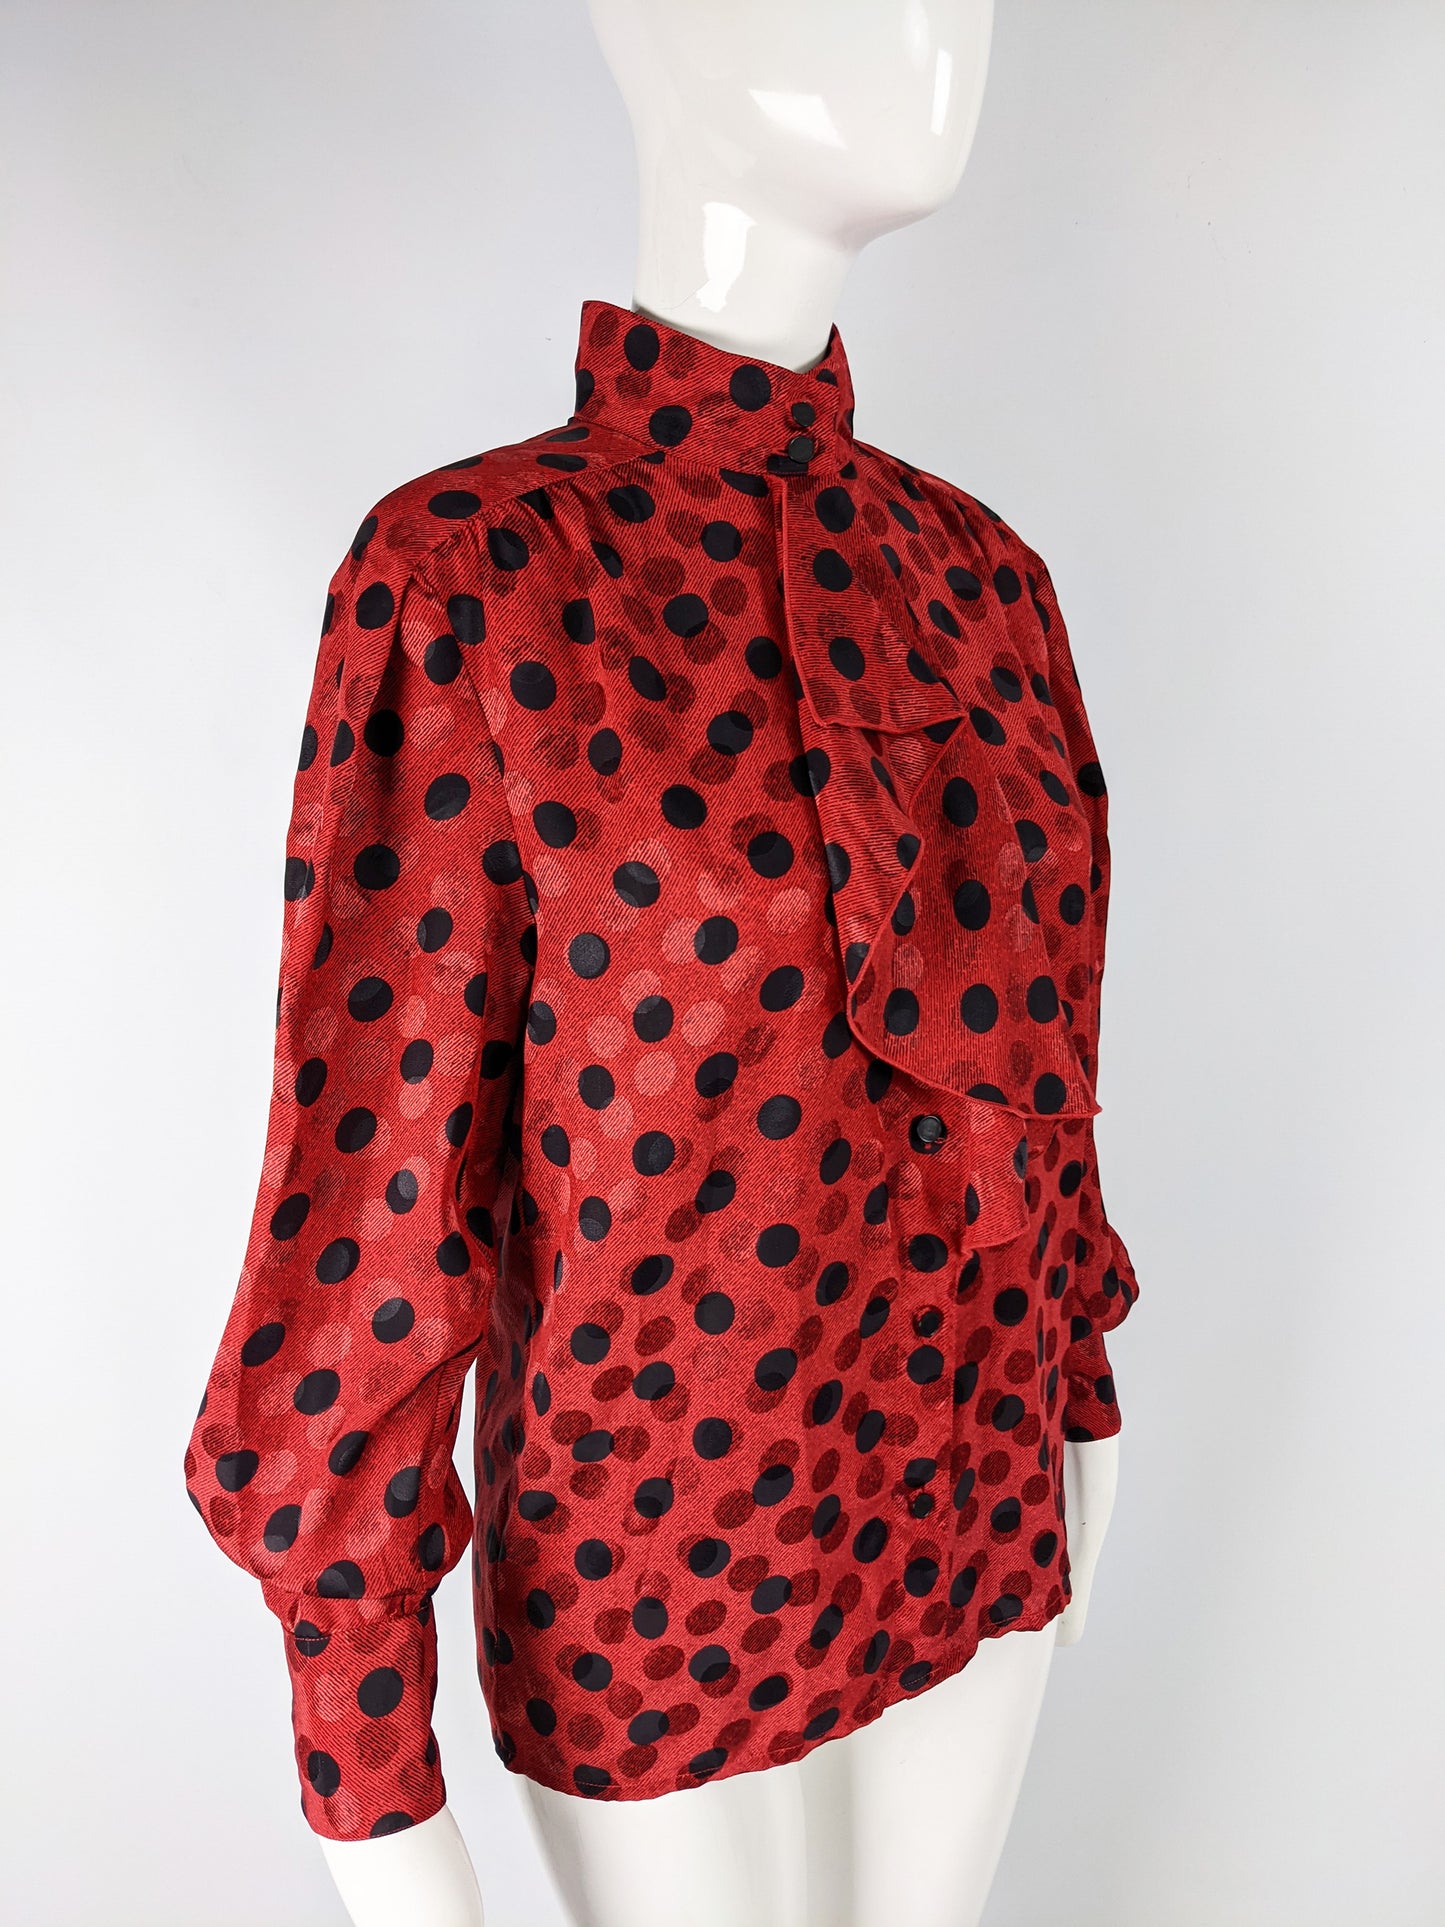 Vintage Red & Black Satin Jacquard Polka Dot Blouse, 1980s